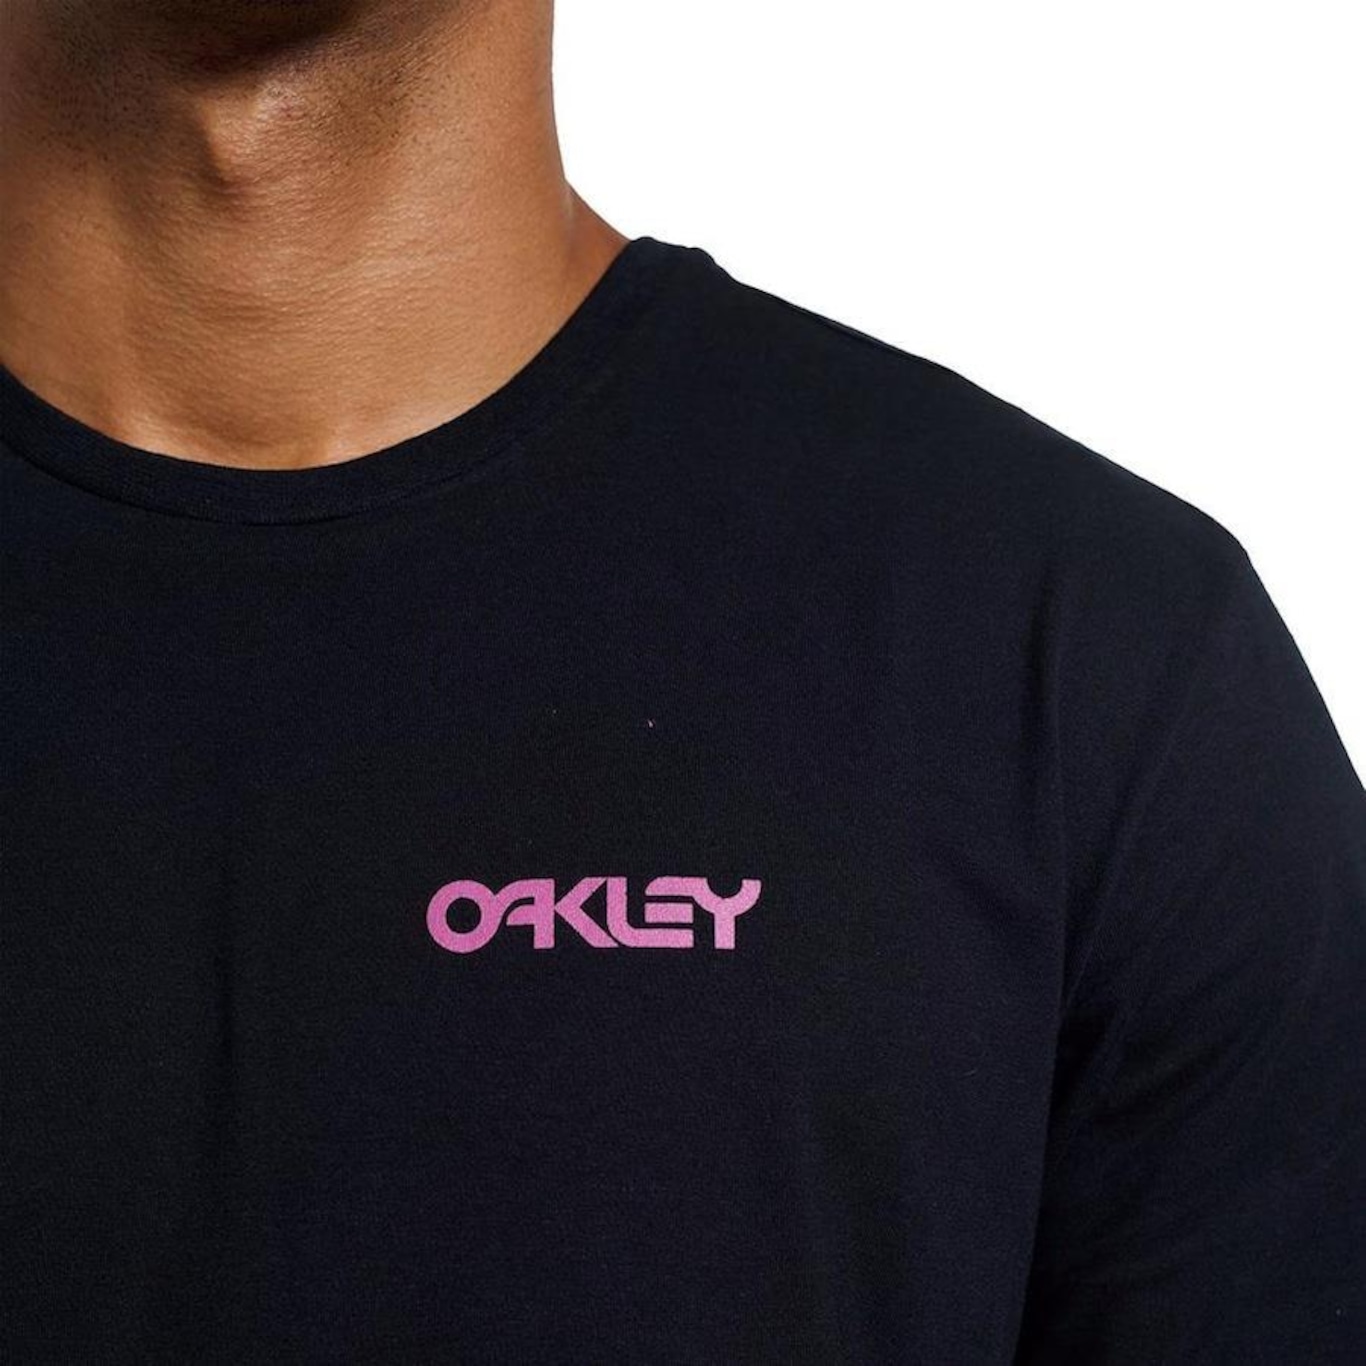 Camiseta Oakley Mod Jellyfish Masculina - Preto